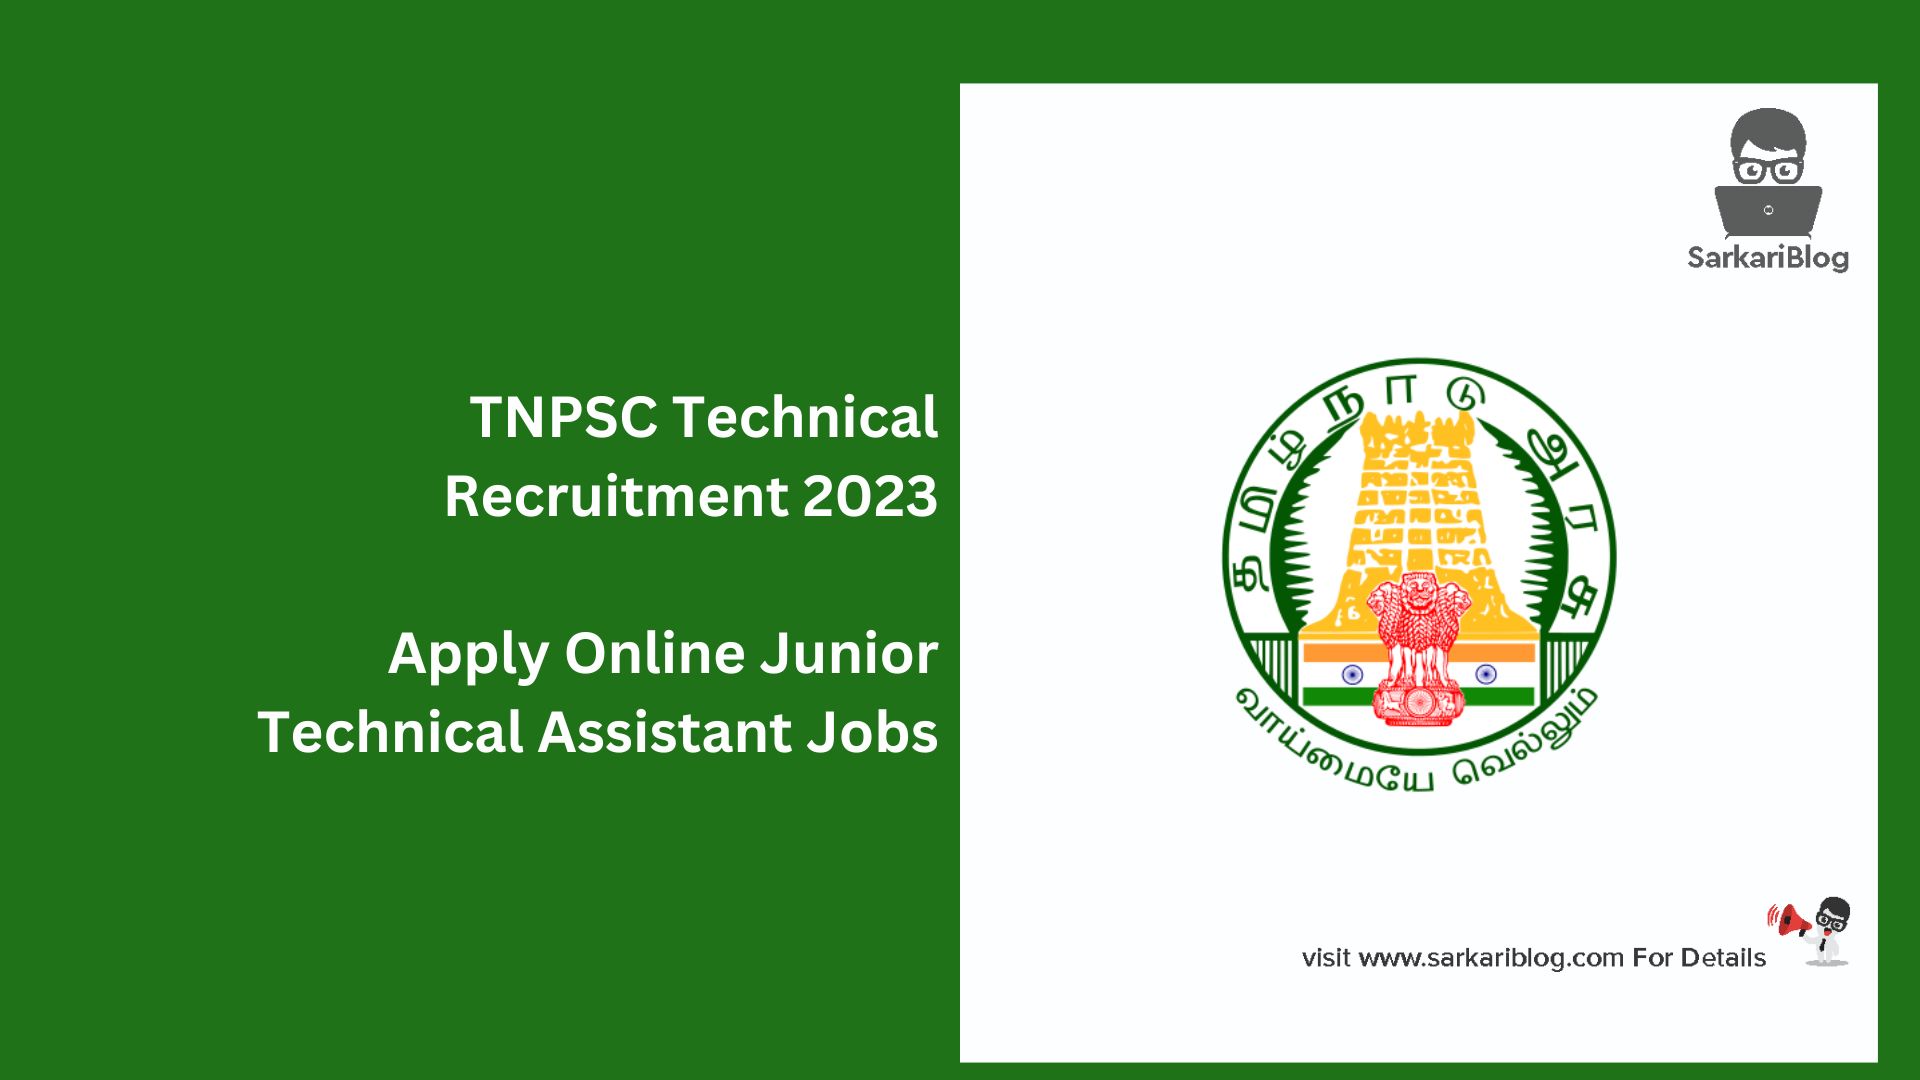 TNPSC Technical Recruitment 2023